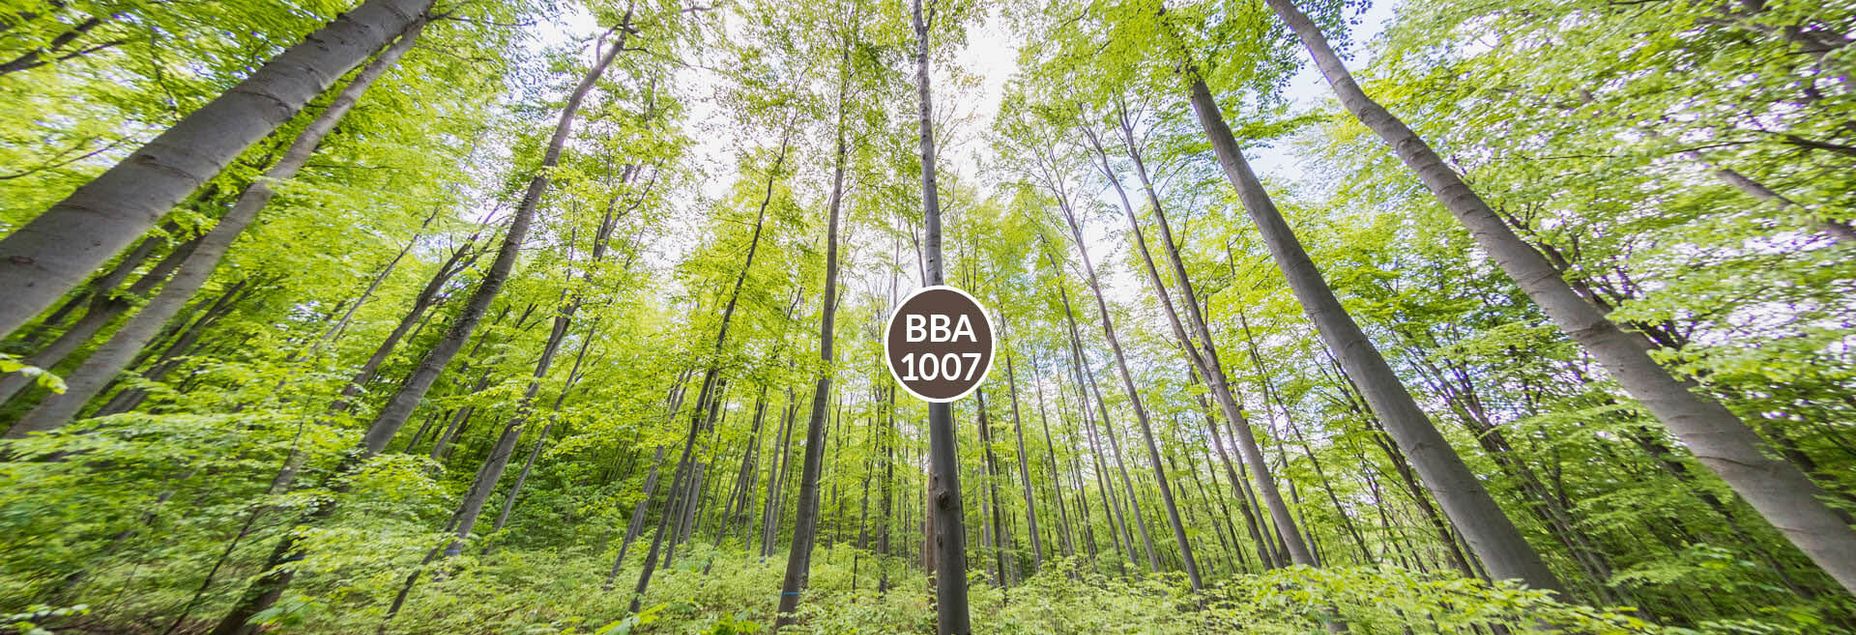 Baum BBA 1007 - Fisheyeperspektive